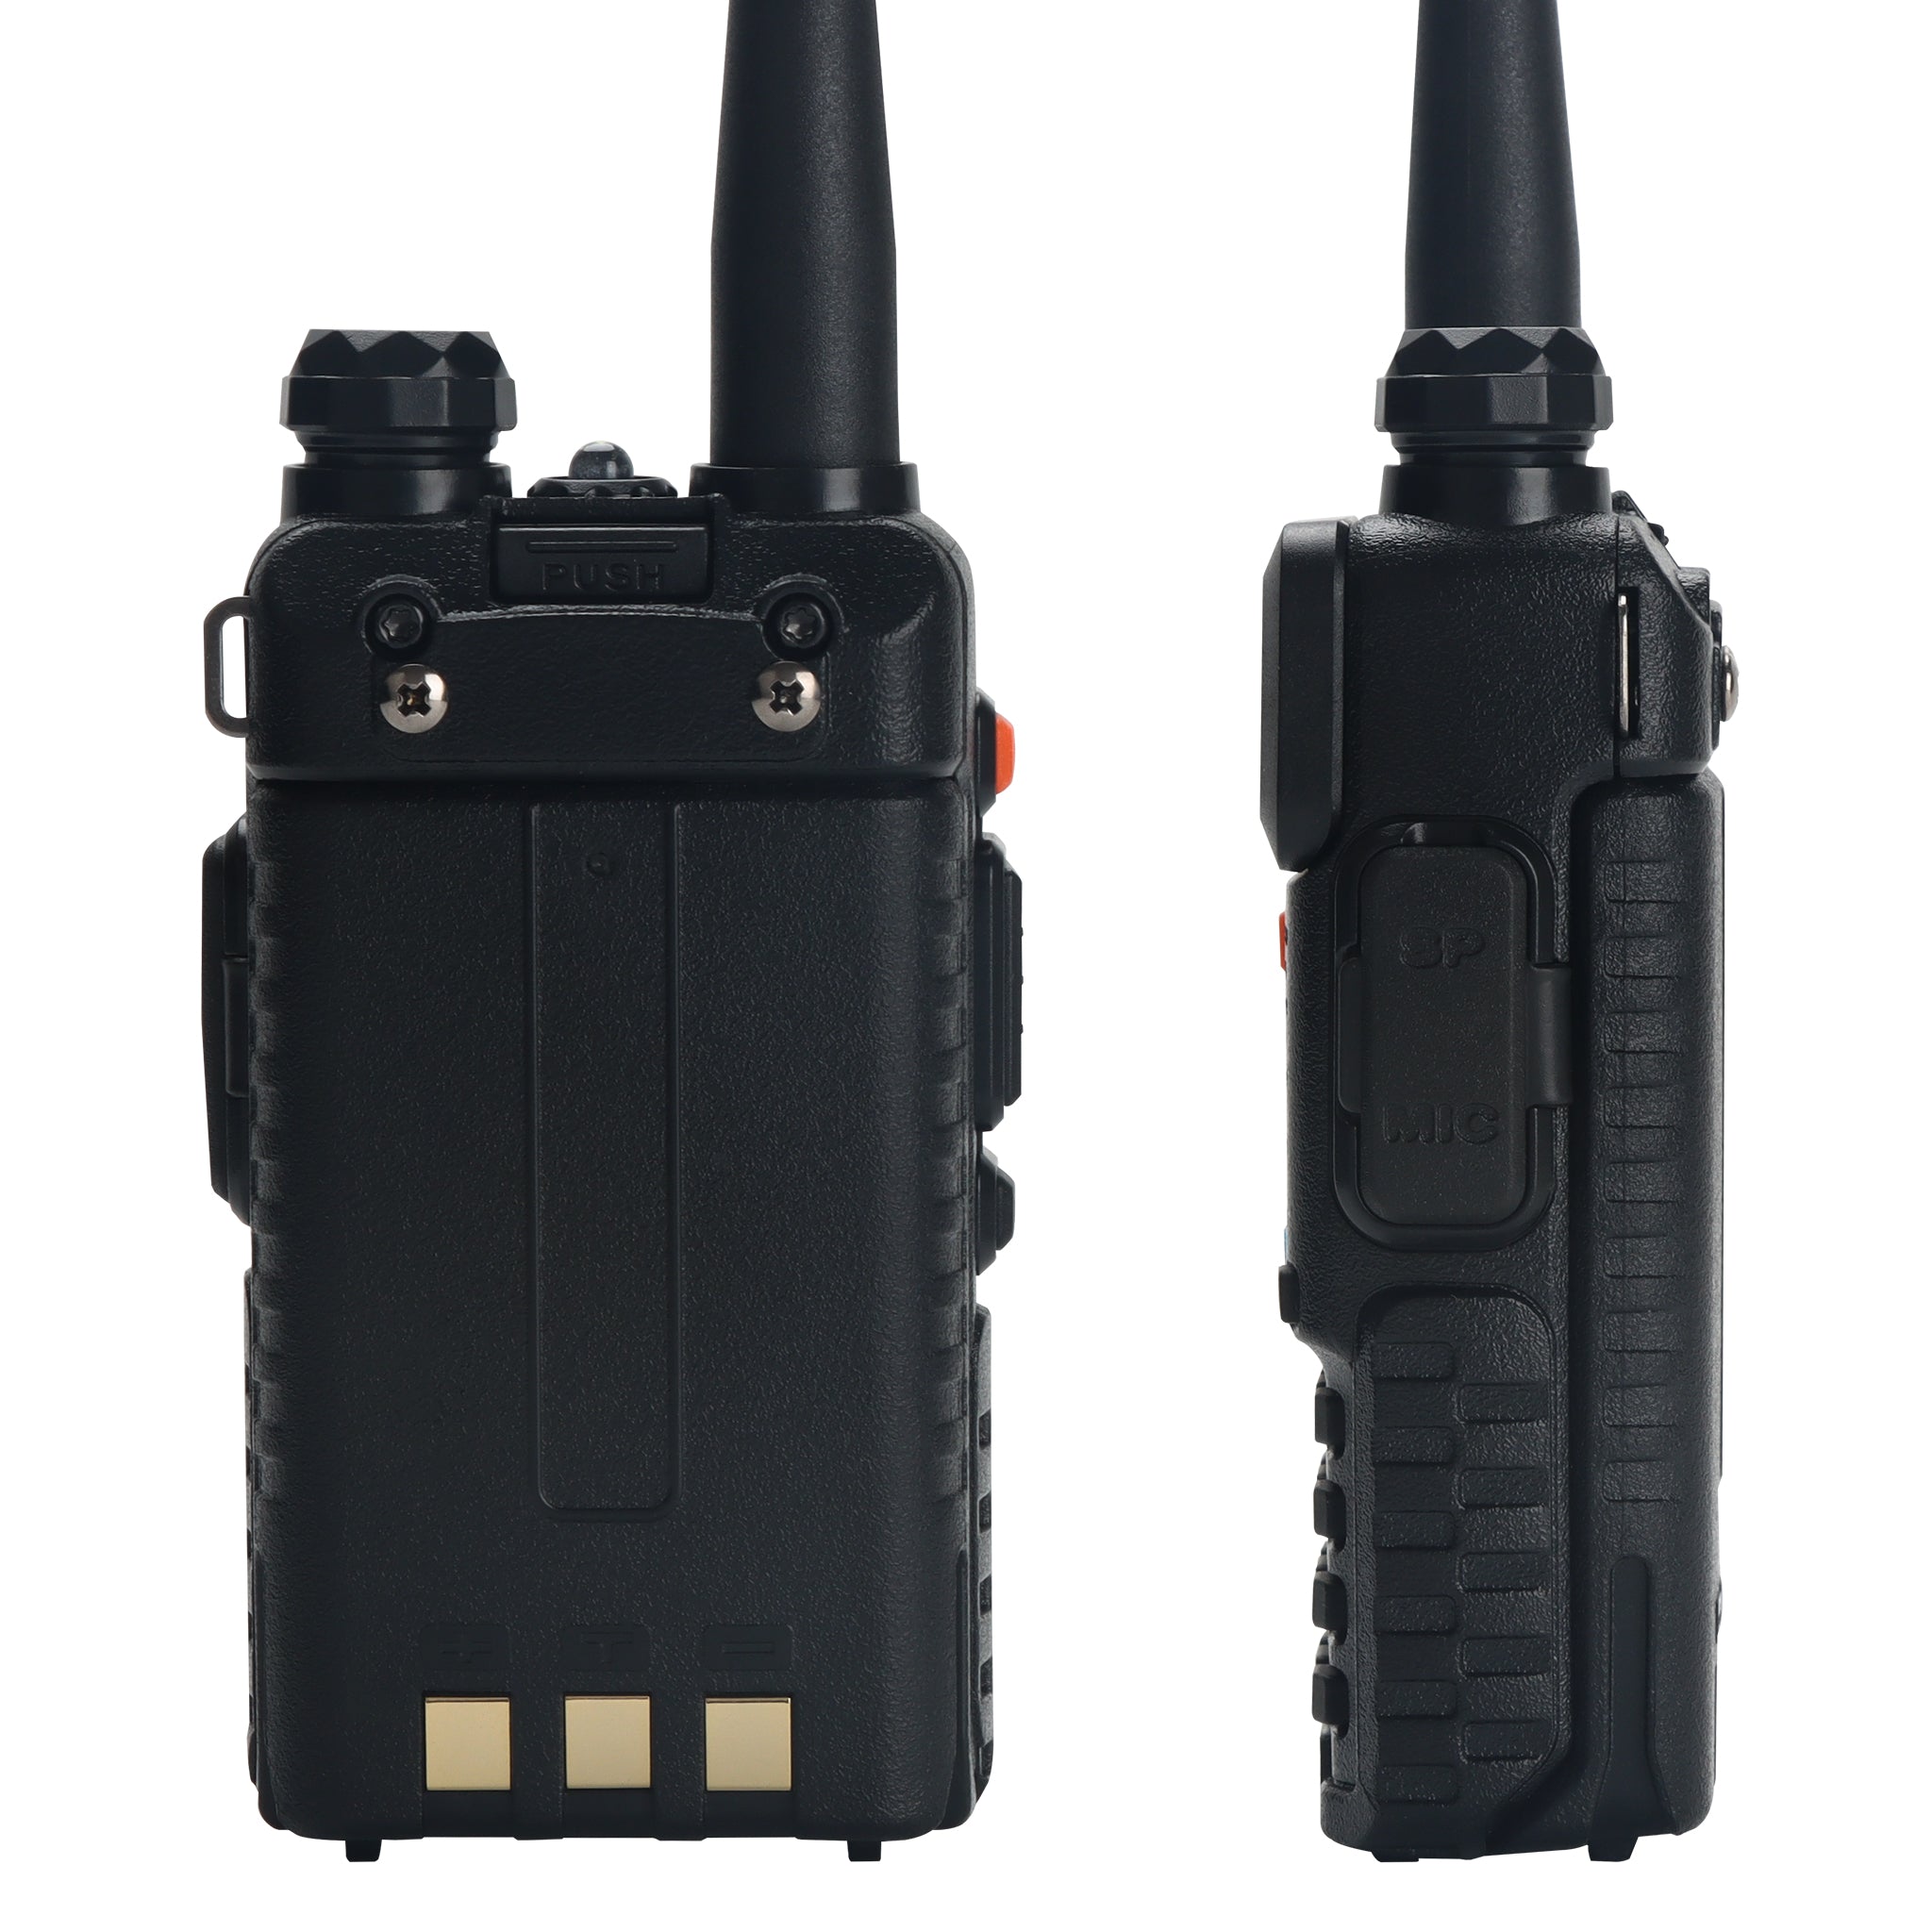 POFUNG BAOFENG UV-5RIC VHF 144-148 MHZ UHF 430-450 MHZ DUAL BAND TWO WAY HAM RADIO - Classic Black